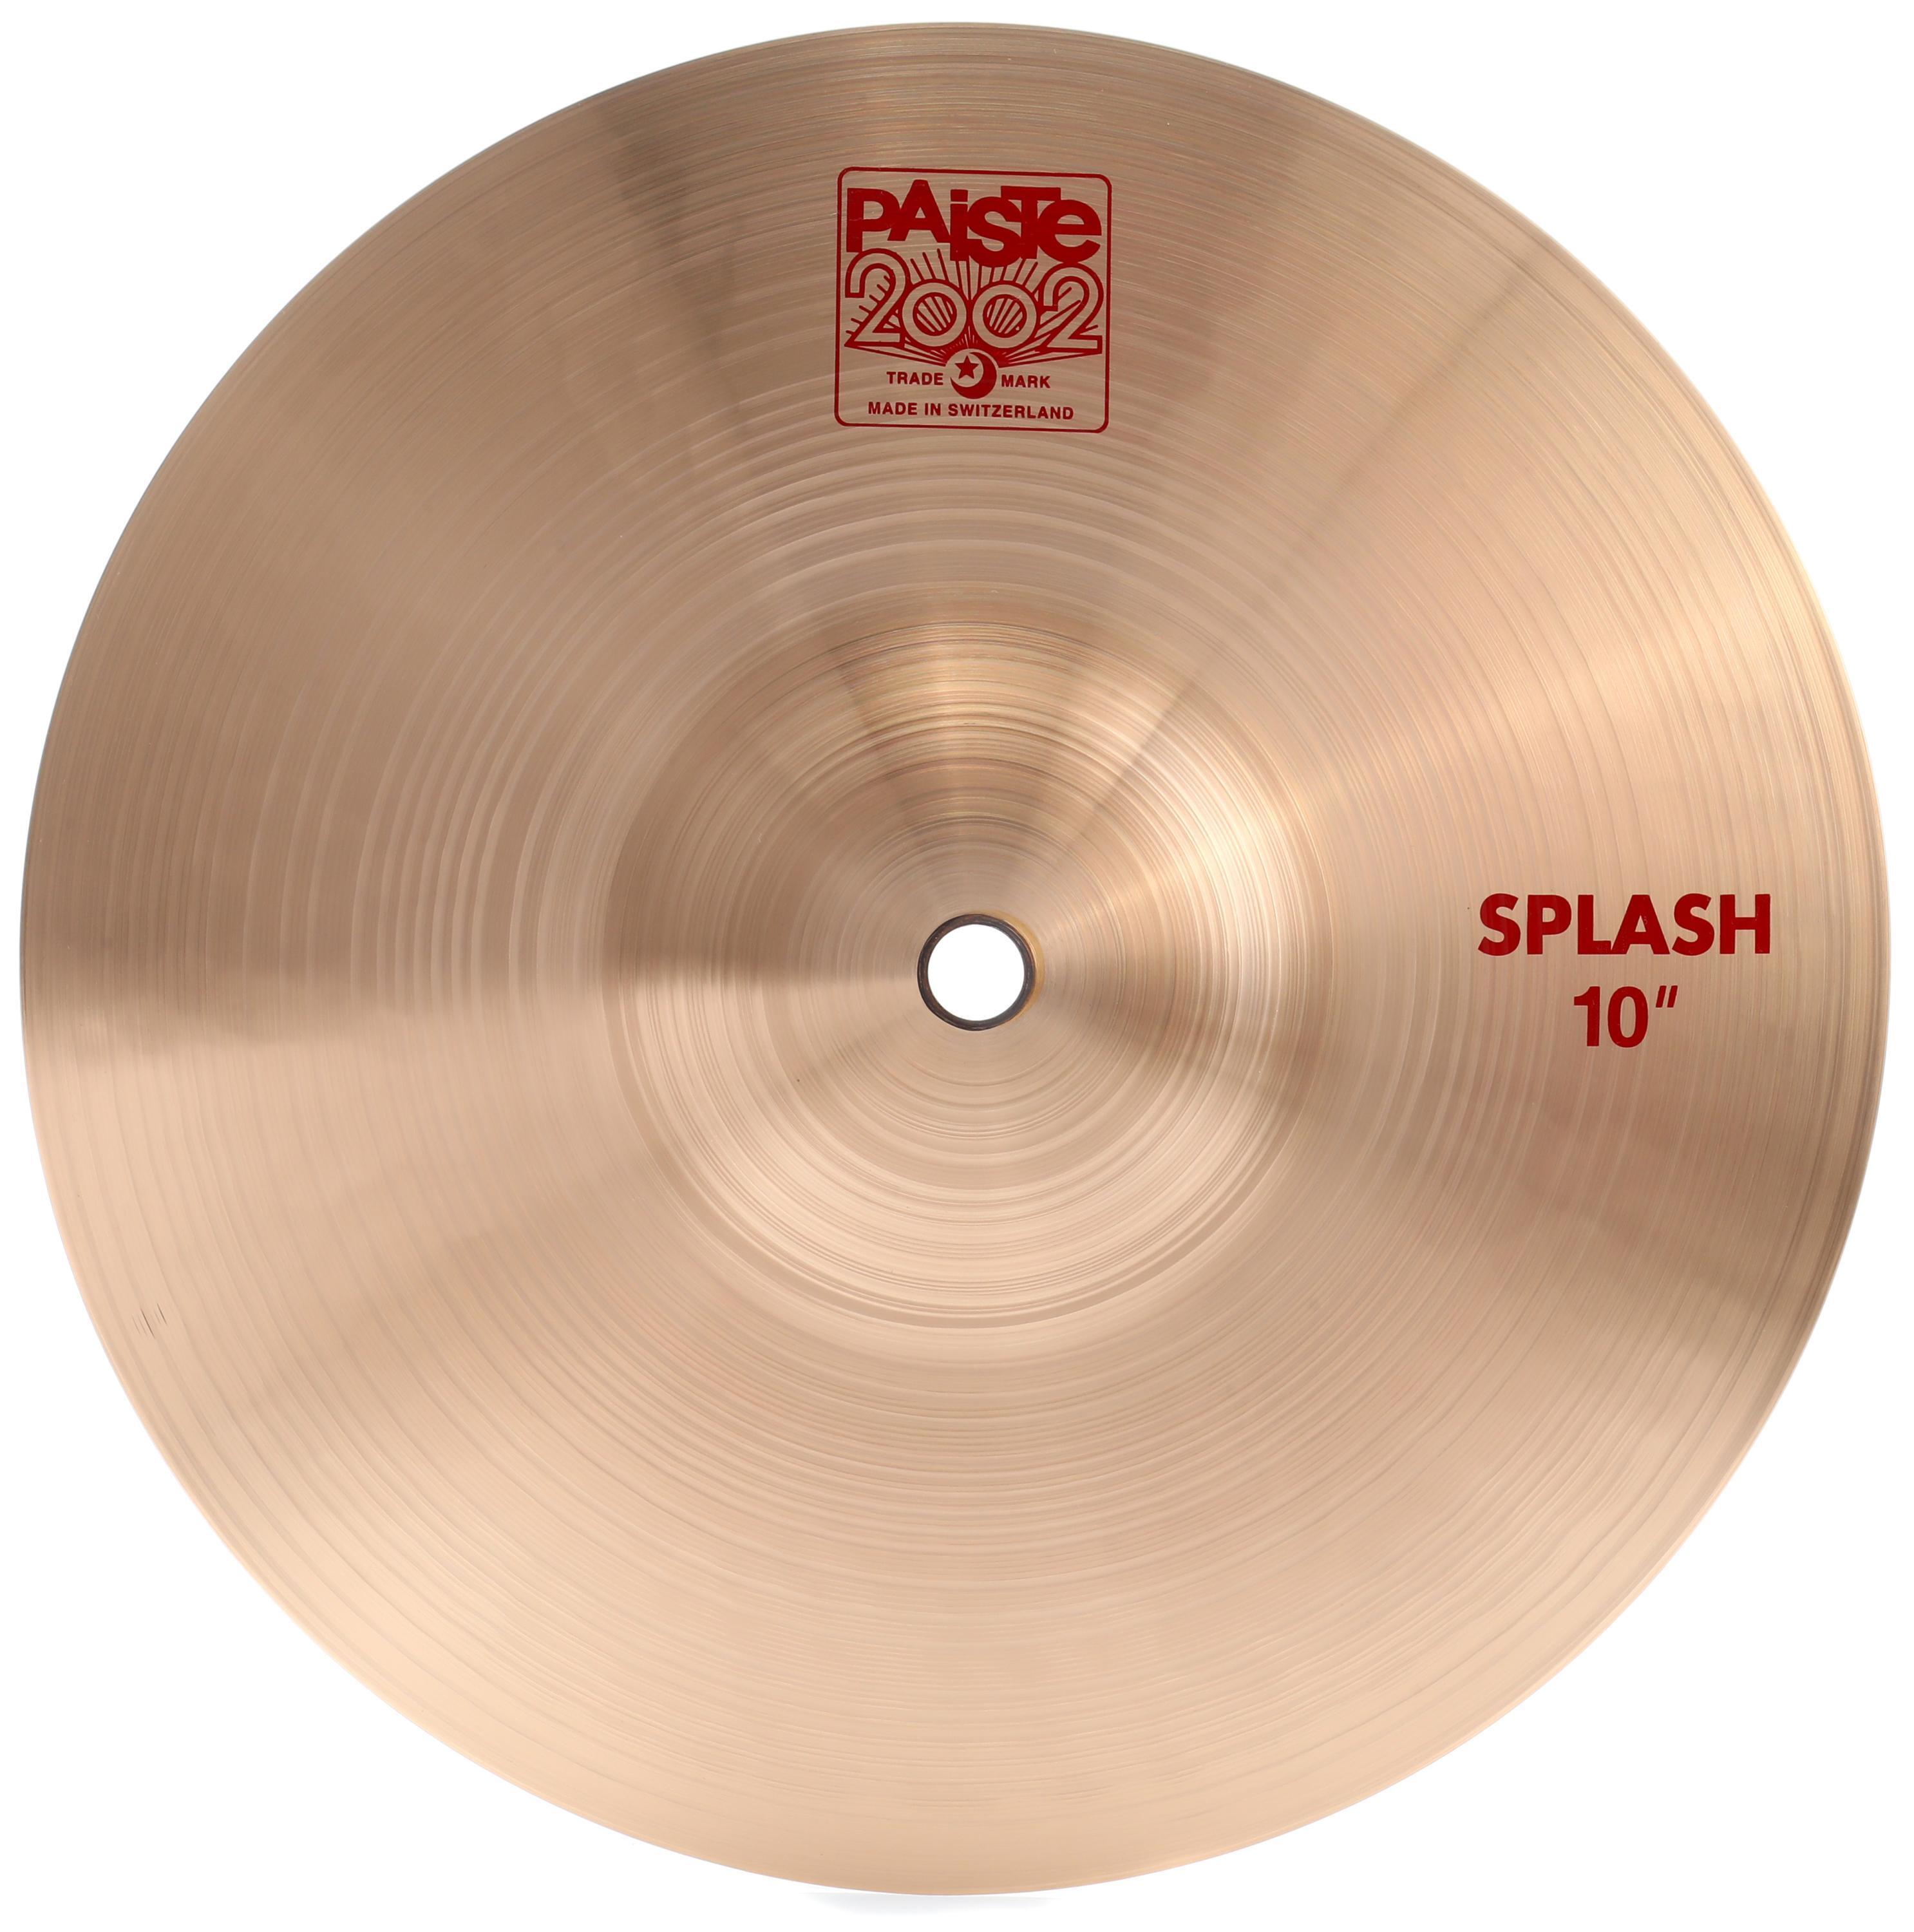 Paiste 8 inch 2002 Splash Cymbal | Sweetwater